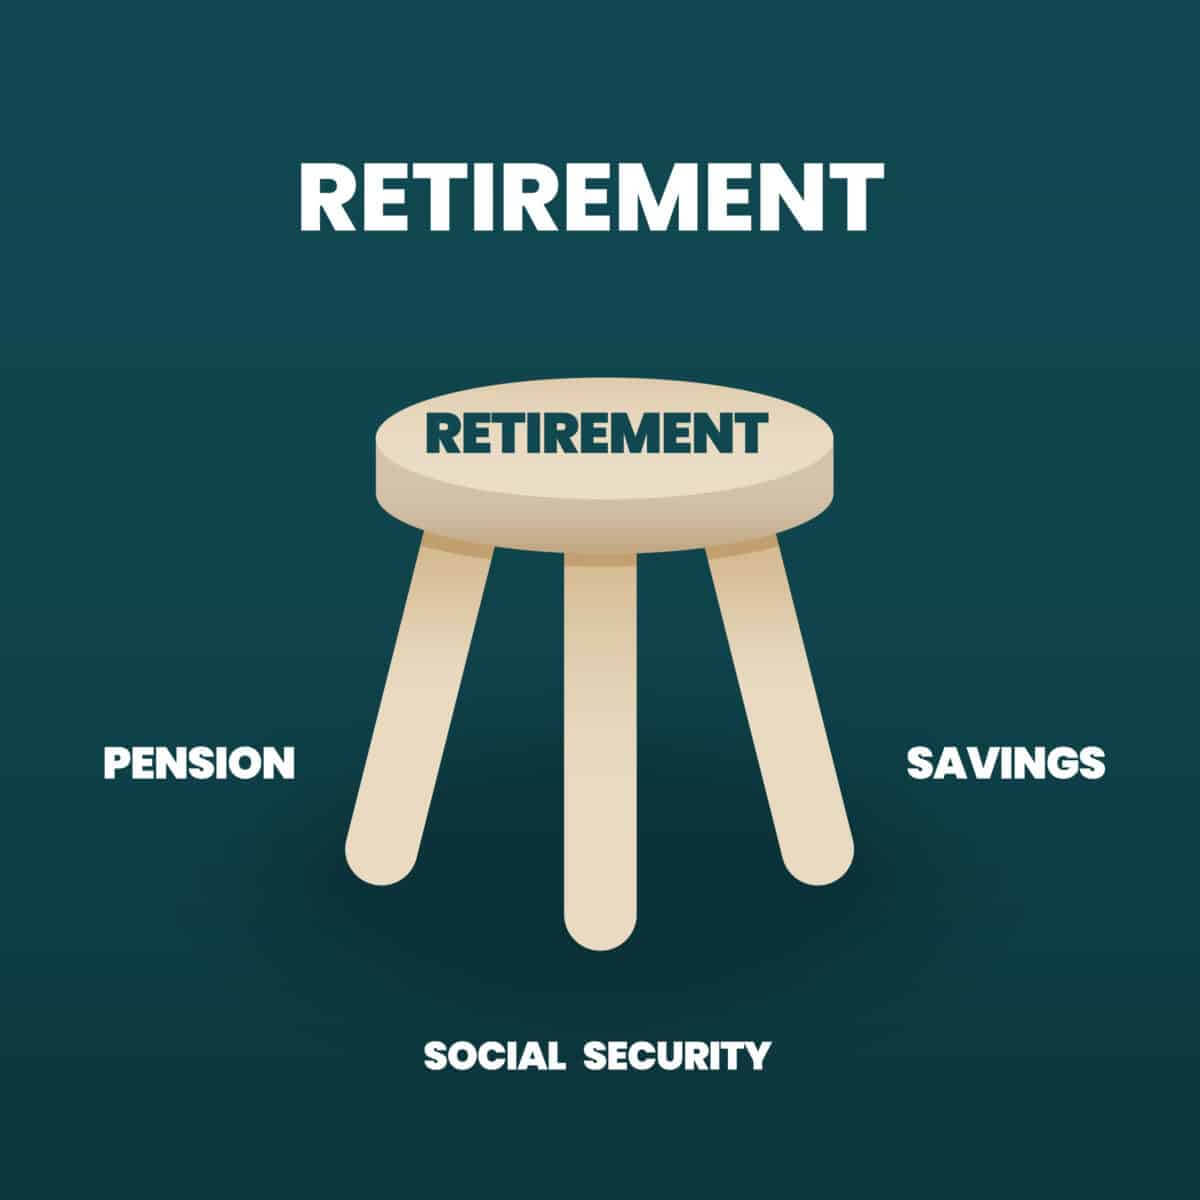 The Three-Legged Stool: Savings, Pension, Social Security